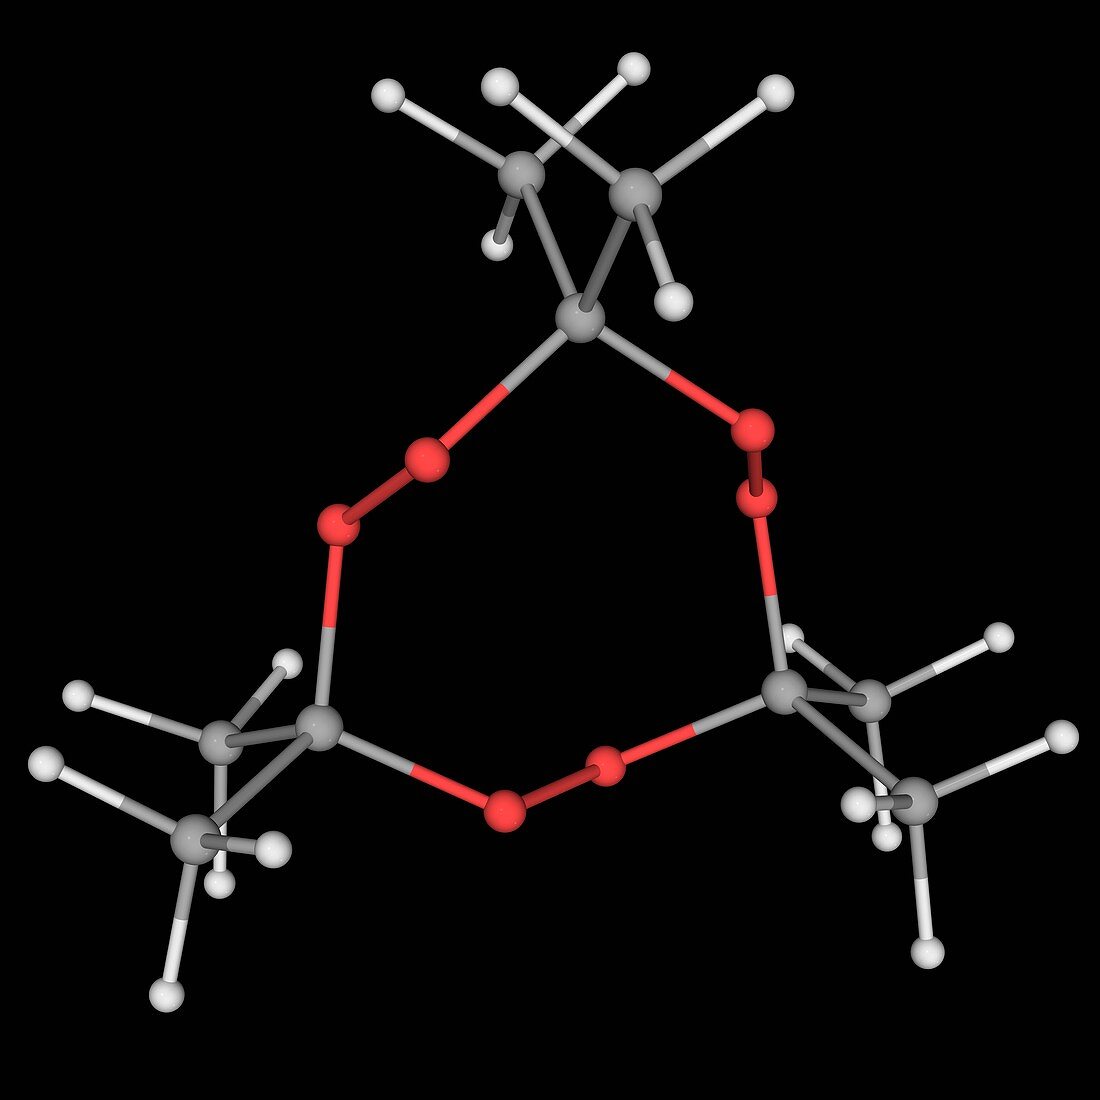 TATP triacetone triperoxide molecule